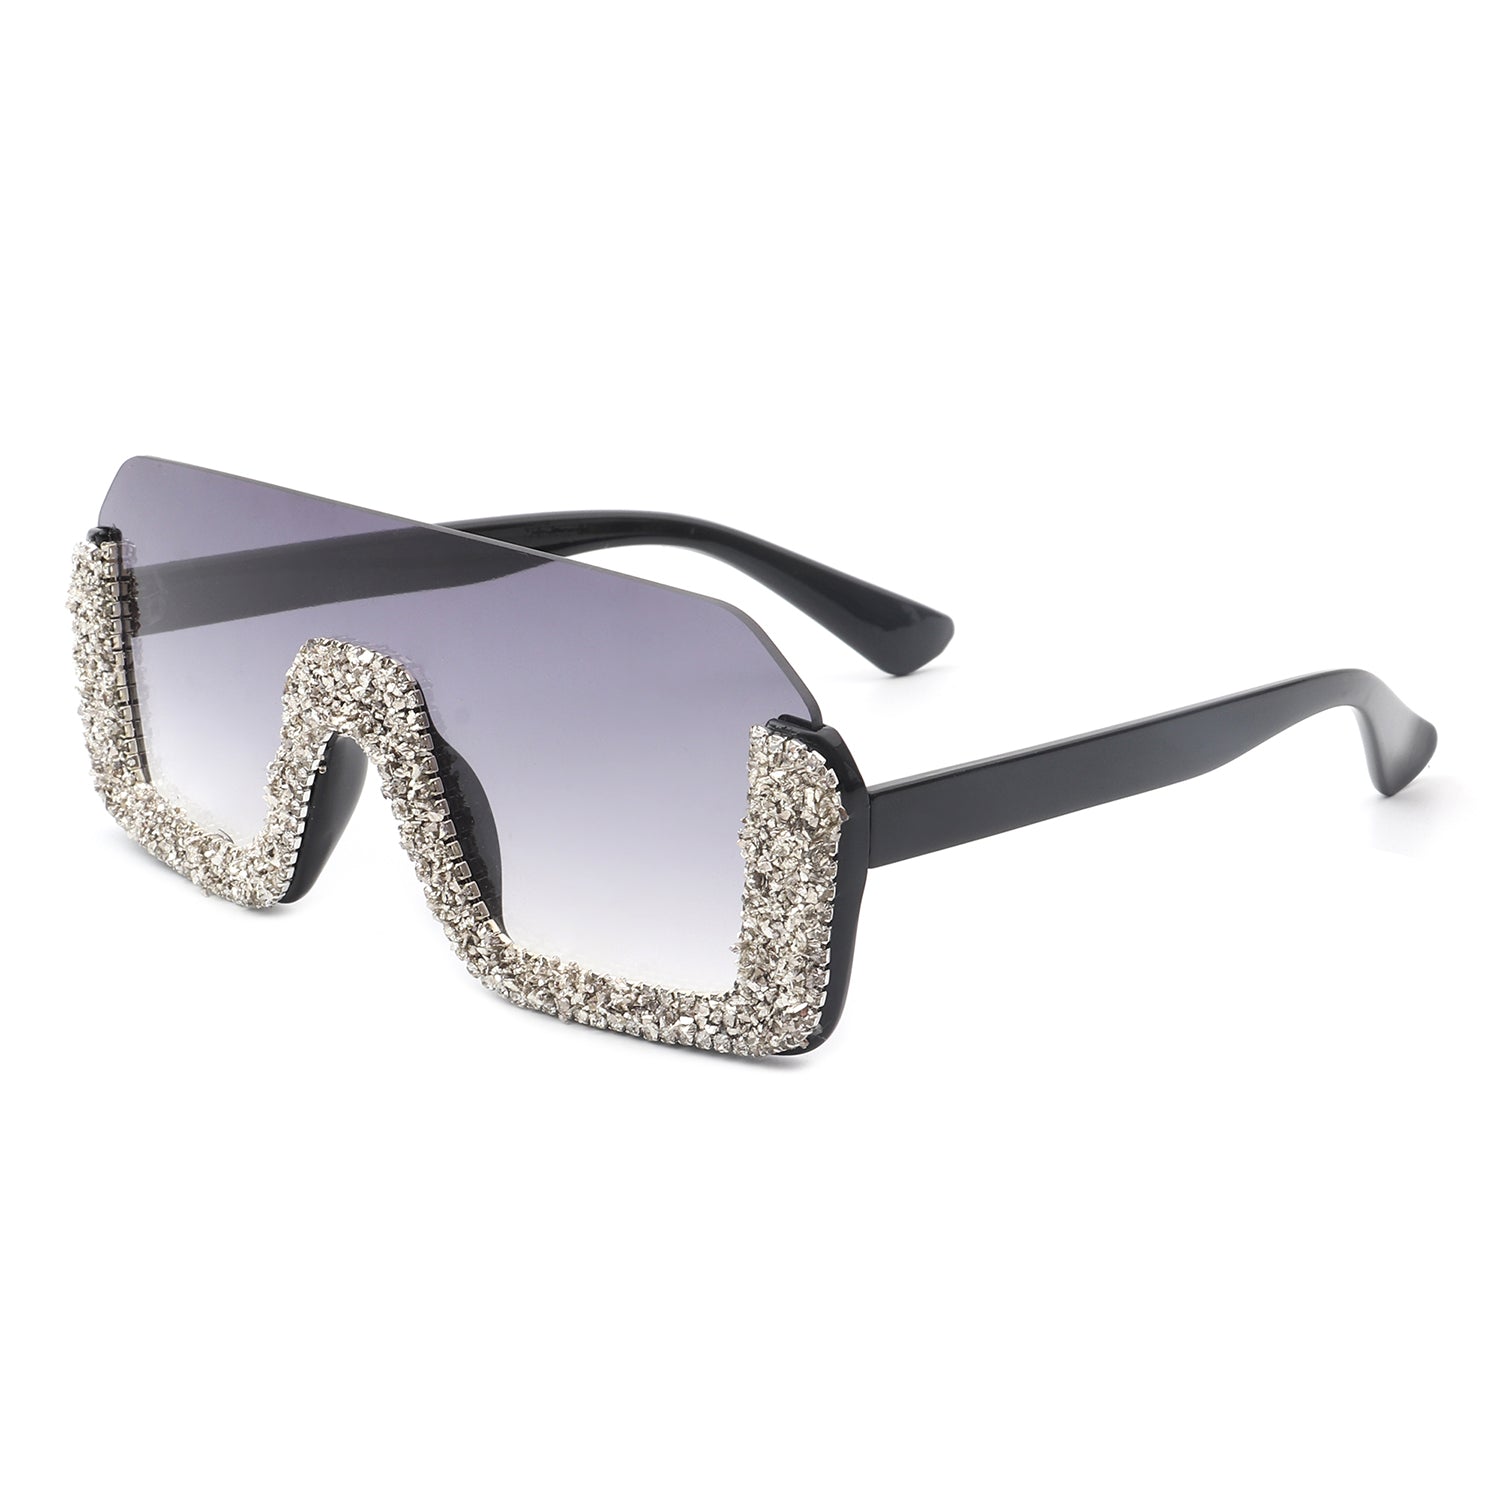 HS3008 - Square Half Frame Retro Oversize Fashion Sunglasses